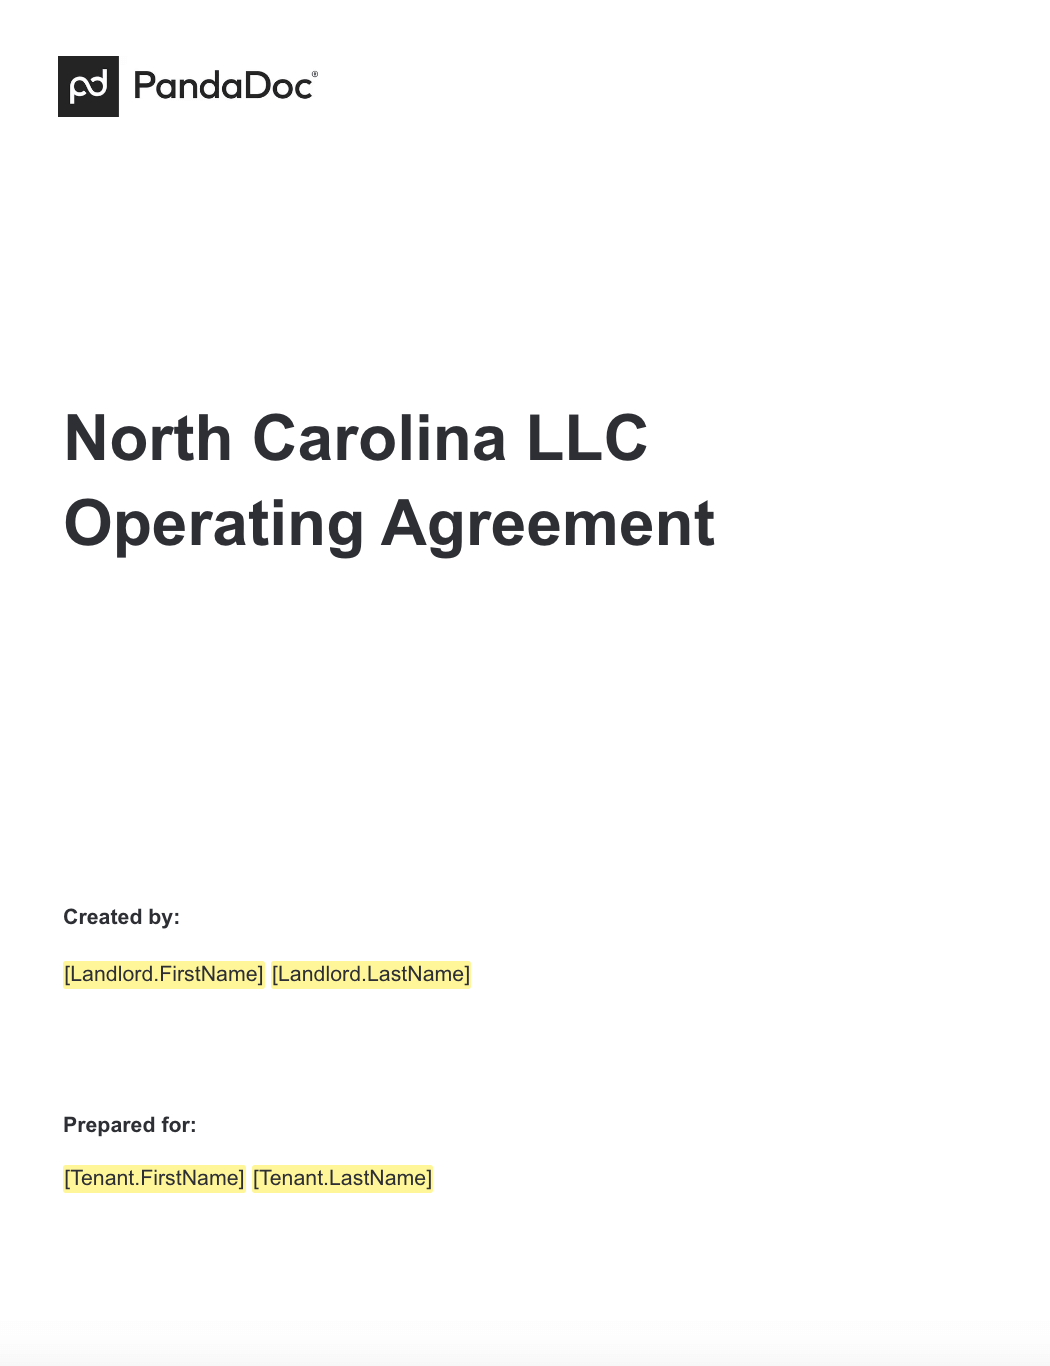 North Carolina LLC Operating Agreement 